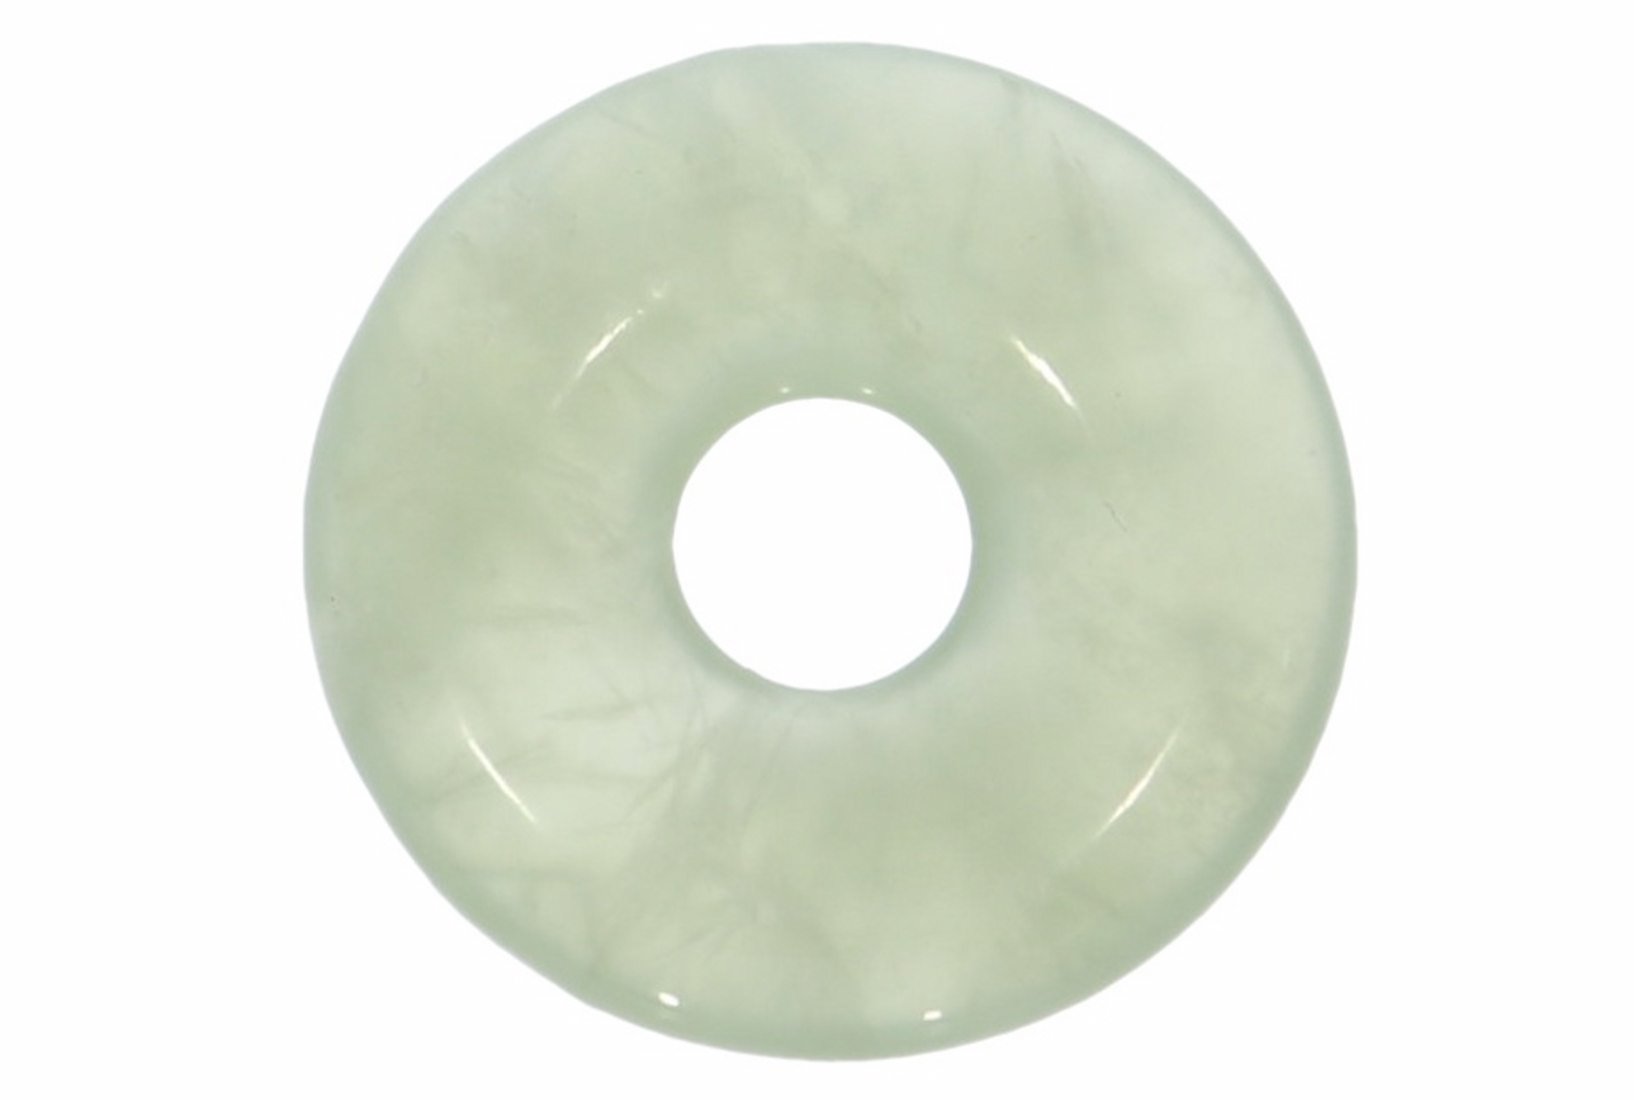 China Jade Donut Schmuck Anhänger 20mm für's Lederband HS1595